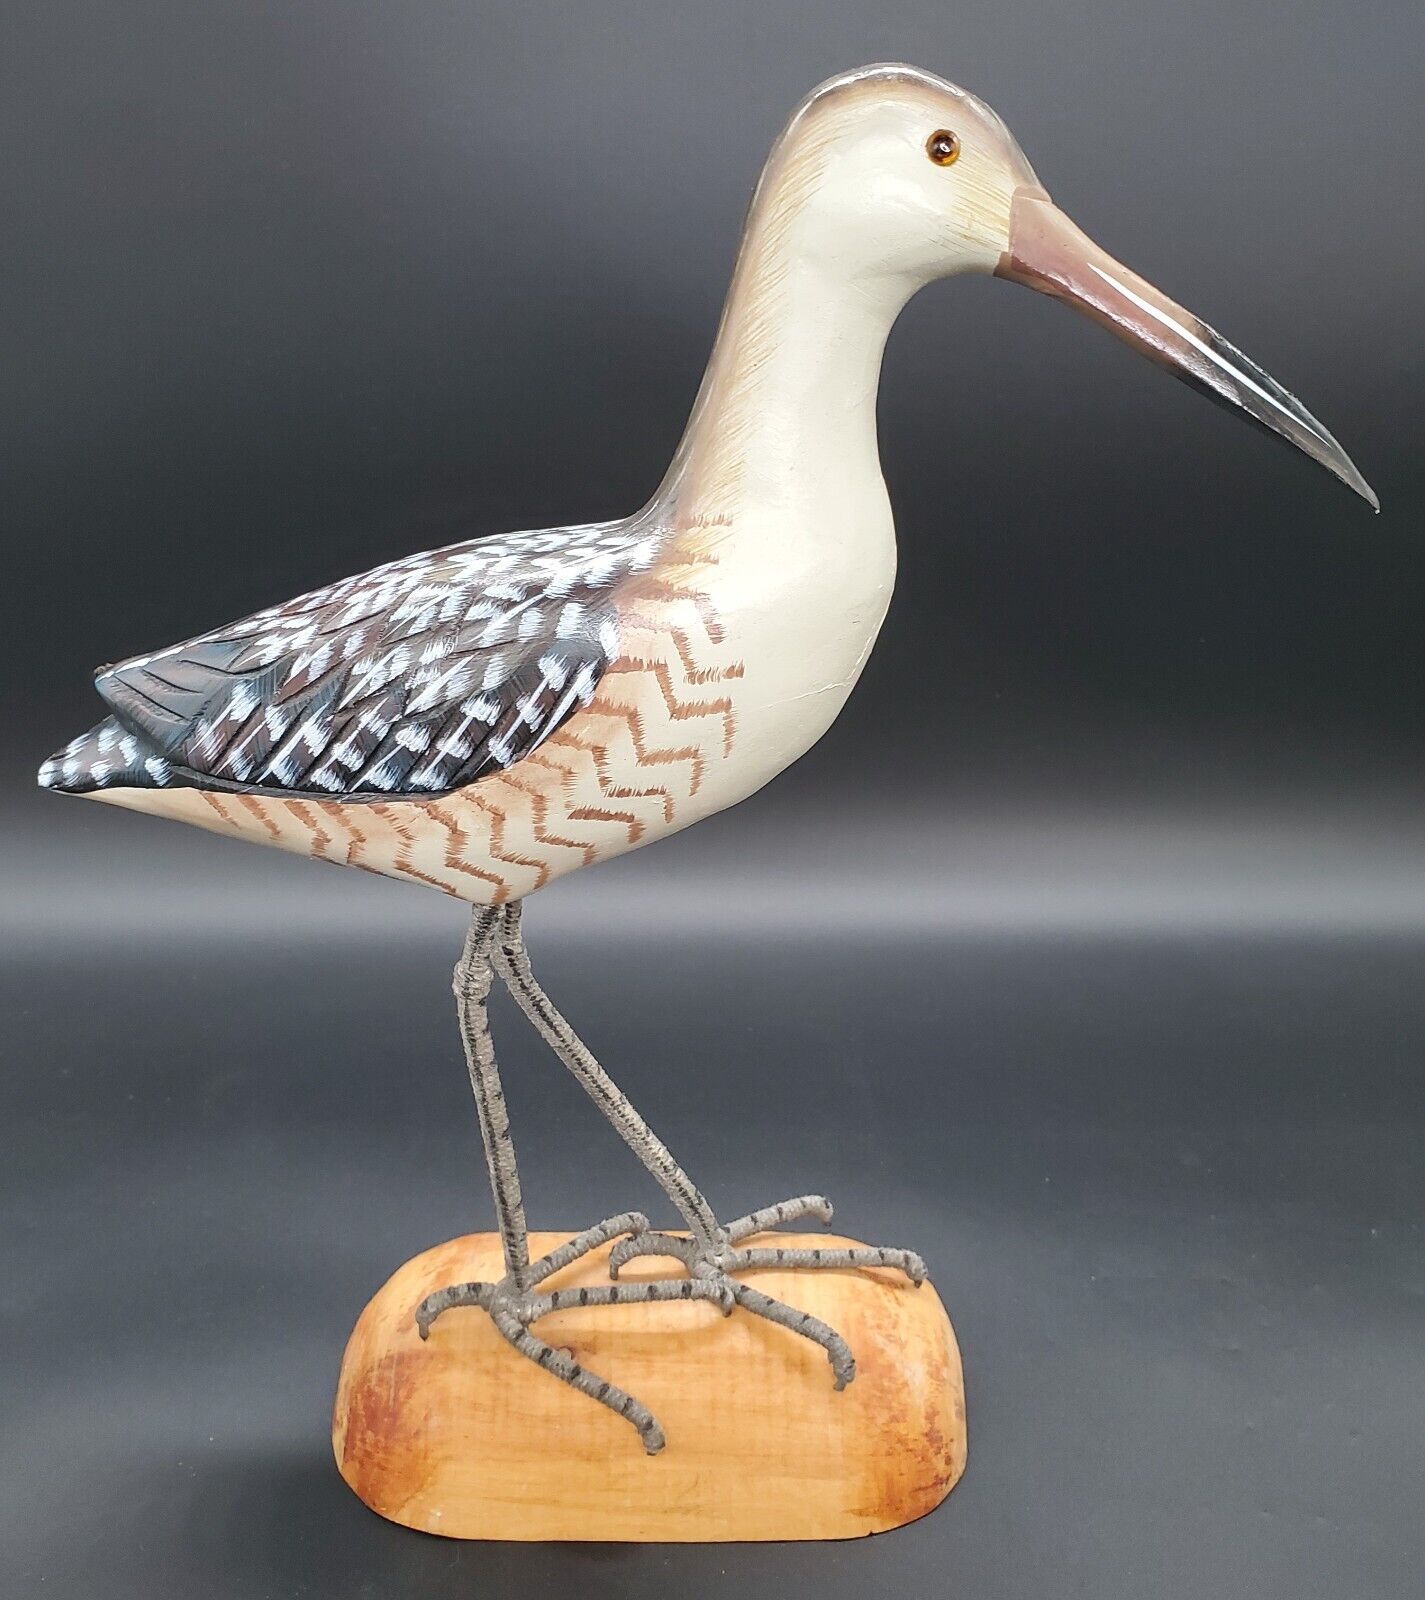 Painted & Sculptured Wood 12” Tall Shore Bird, Cord Feet on a Wood Base. G358G